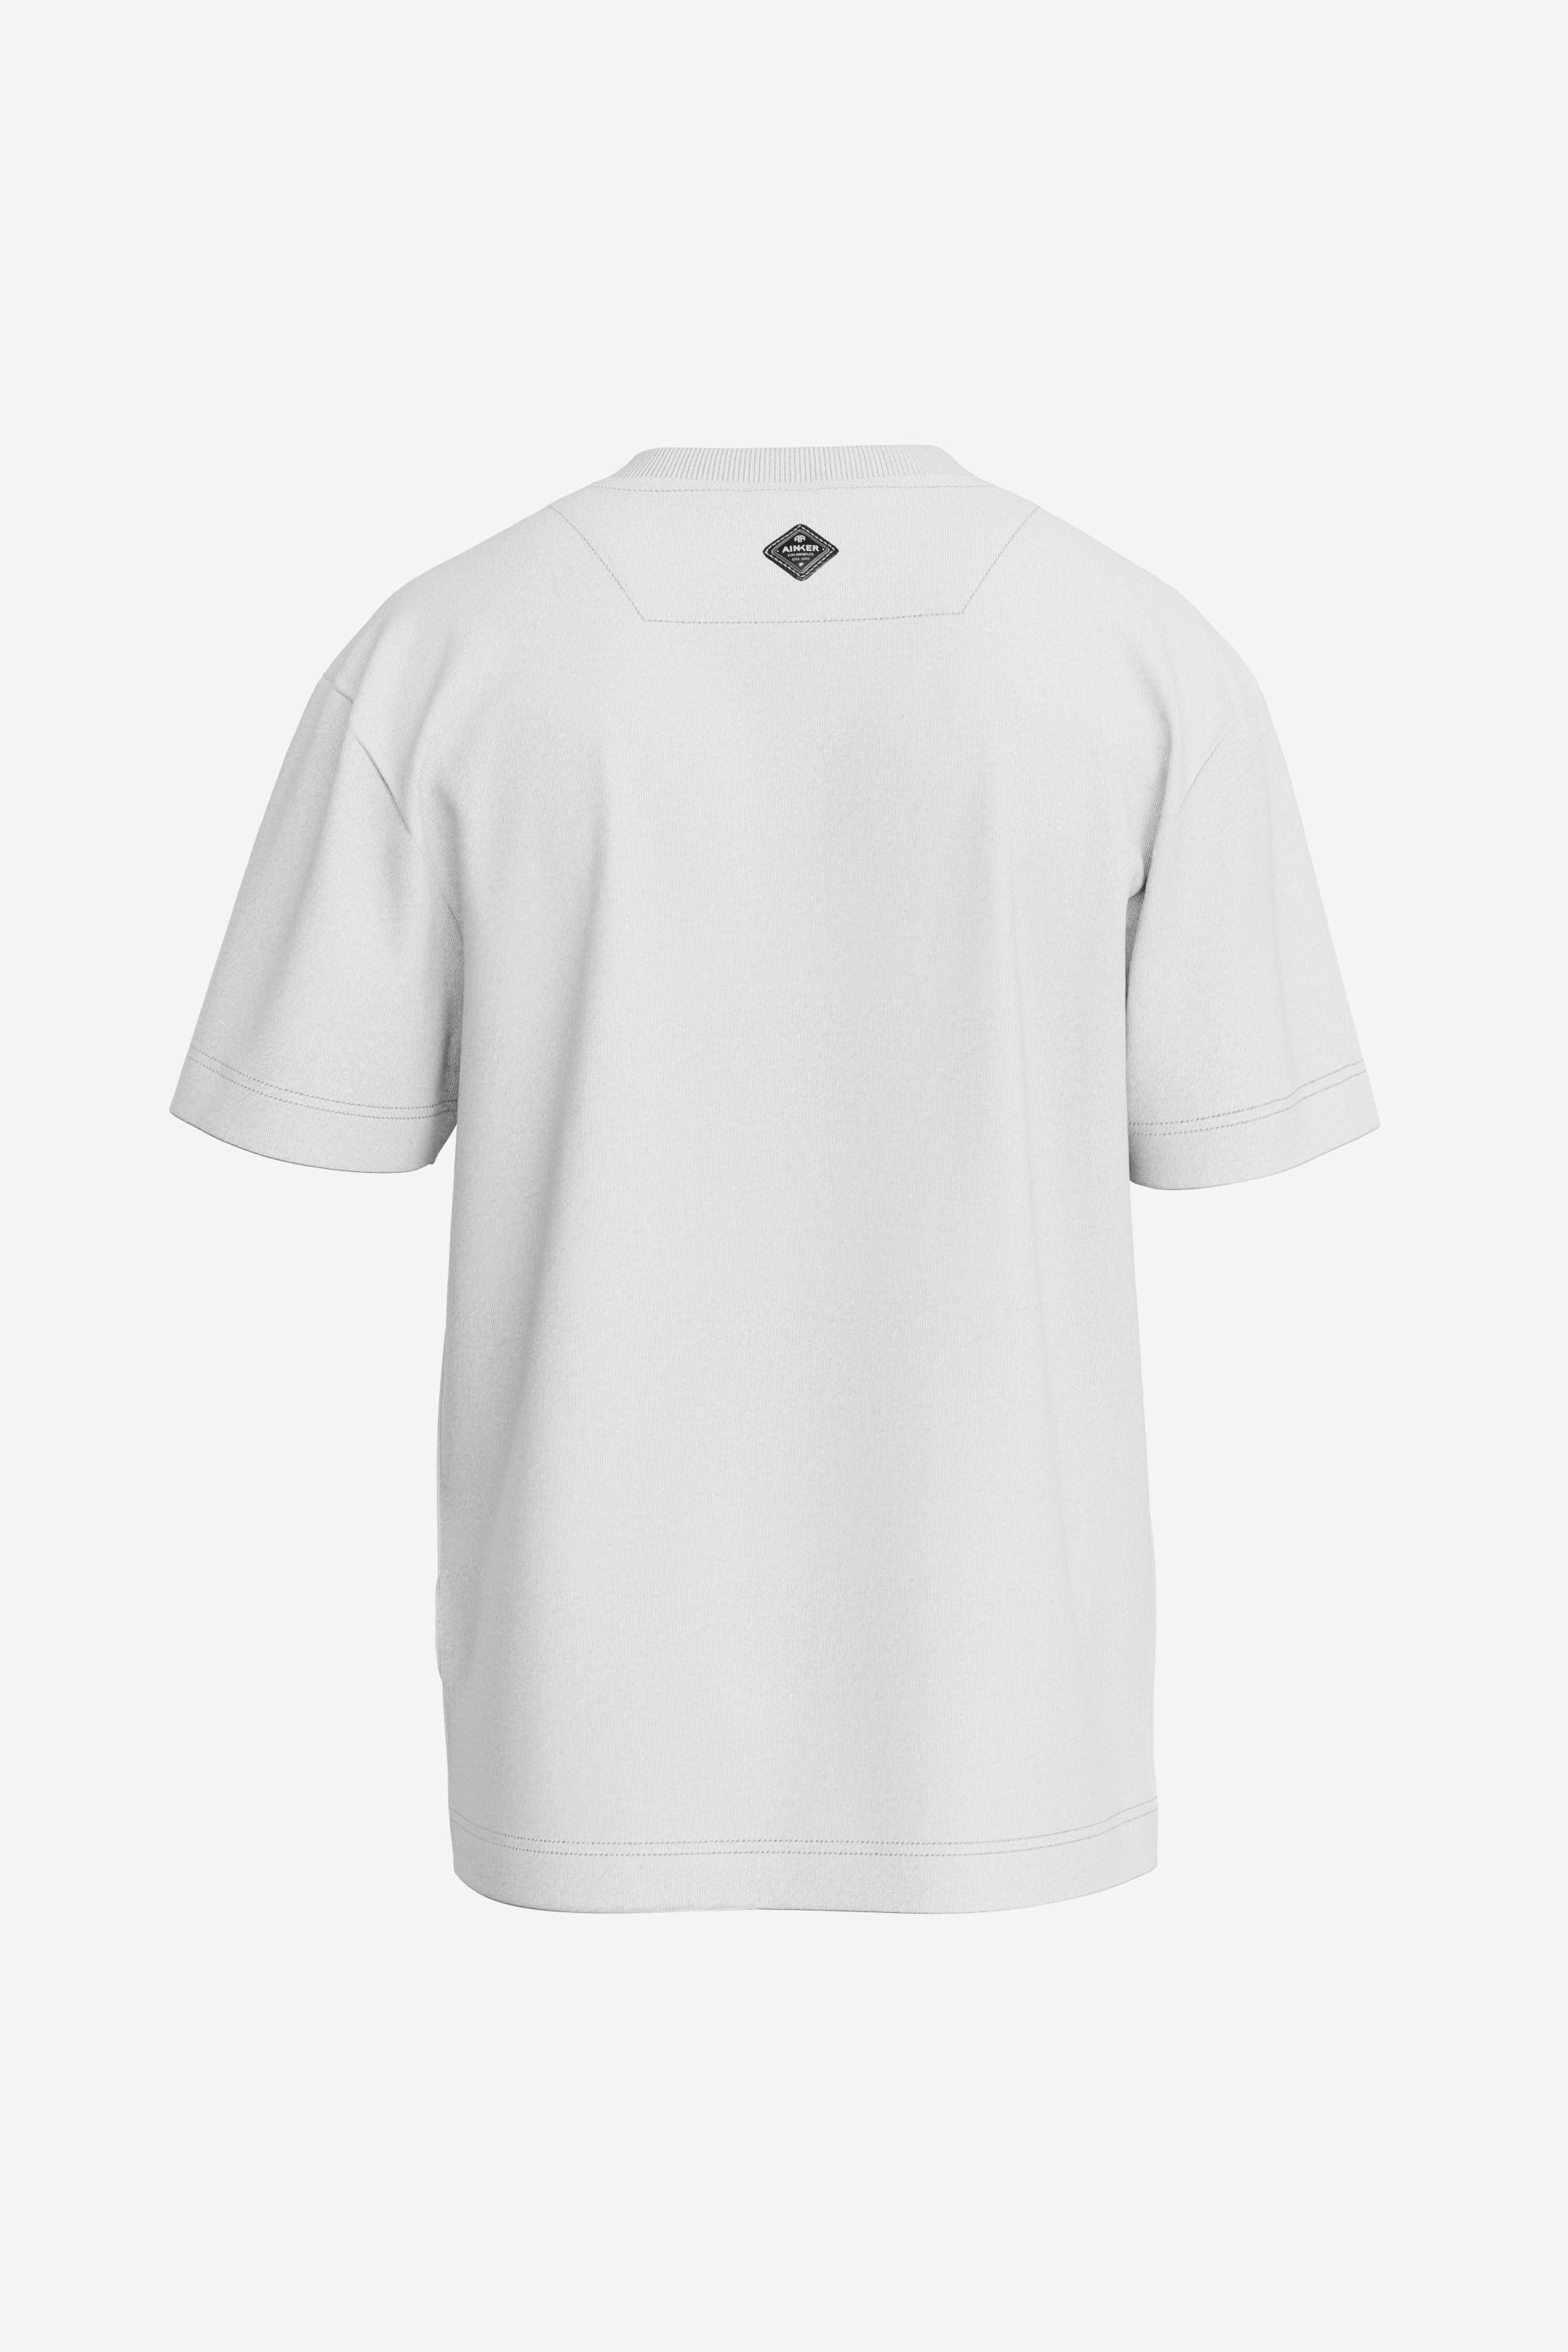 Metal White Mercerize T-Shirt